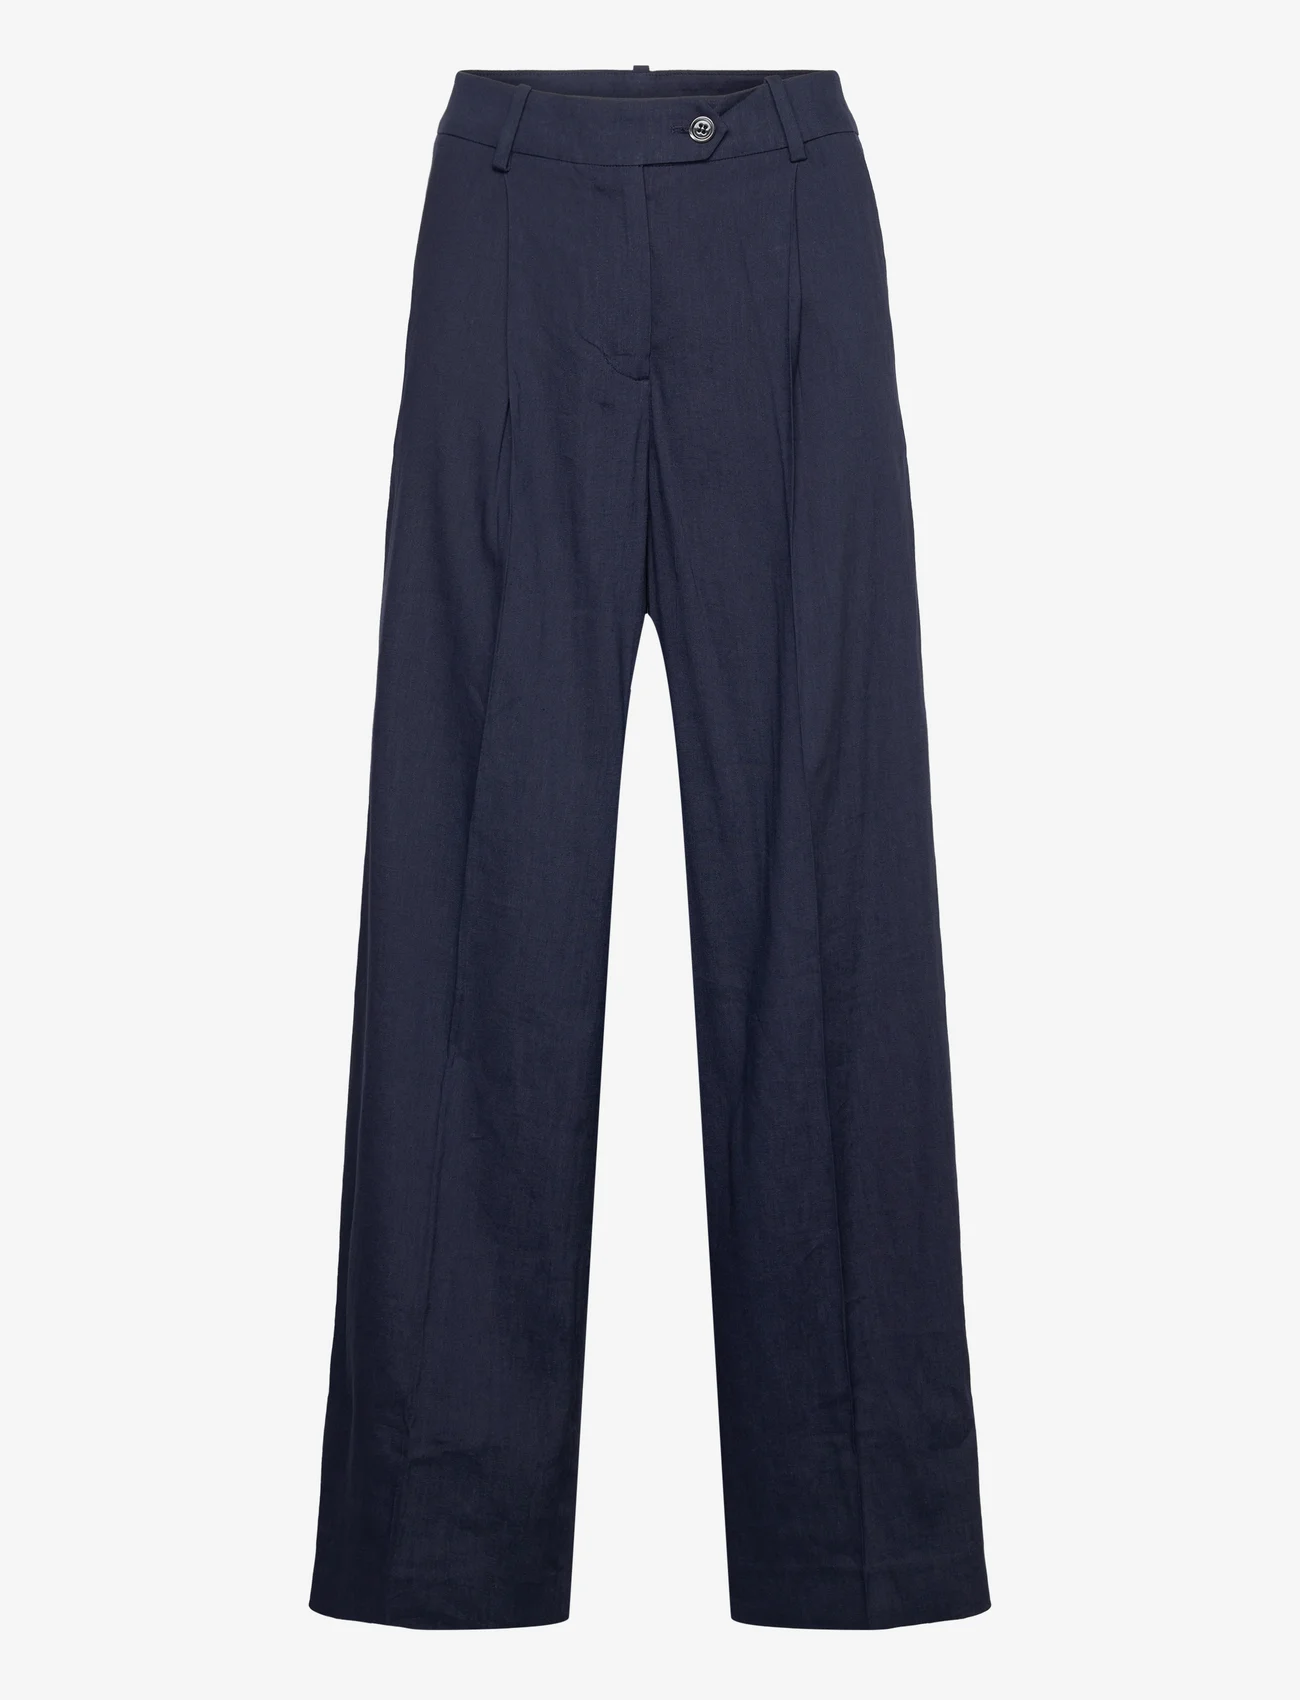 GANT - WIDE STRETCH LINEN PANT - linen trousers - evening blue - 0